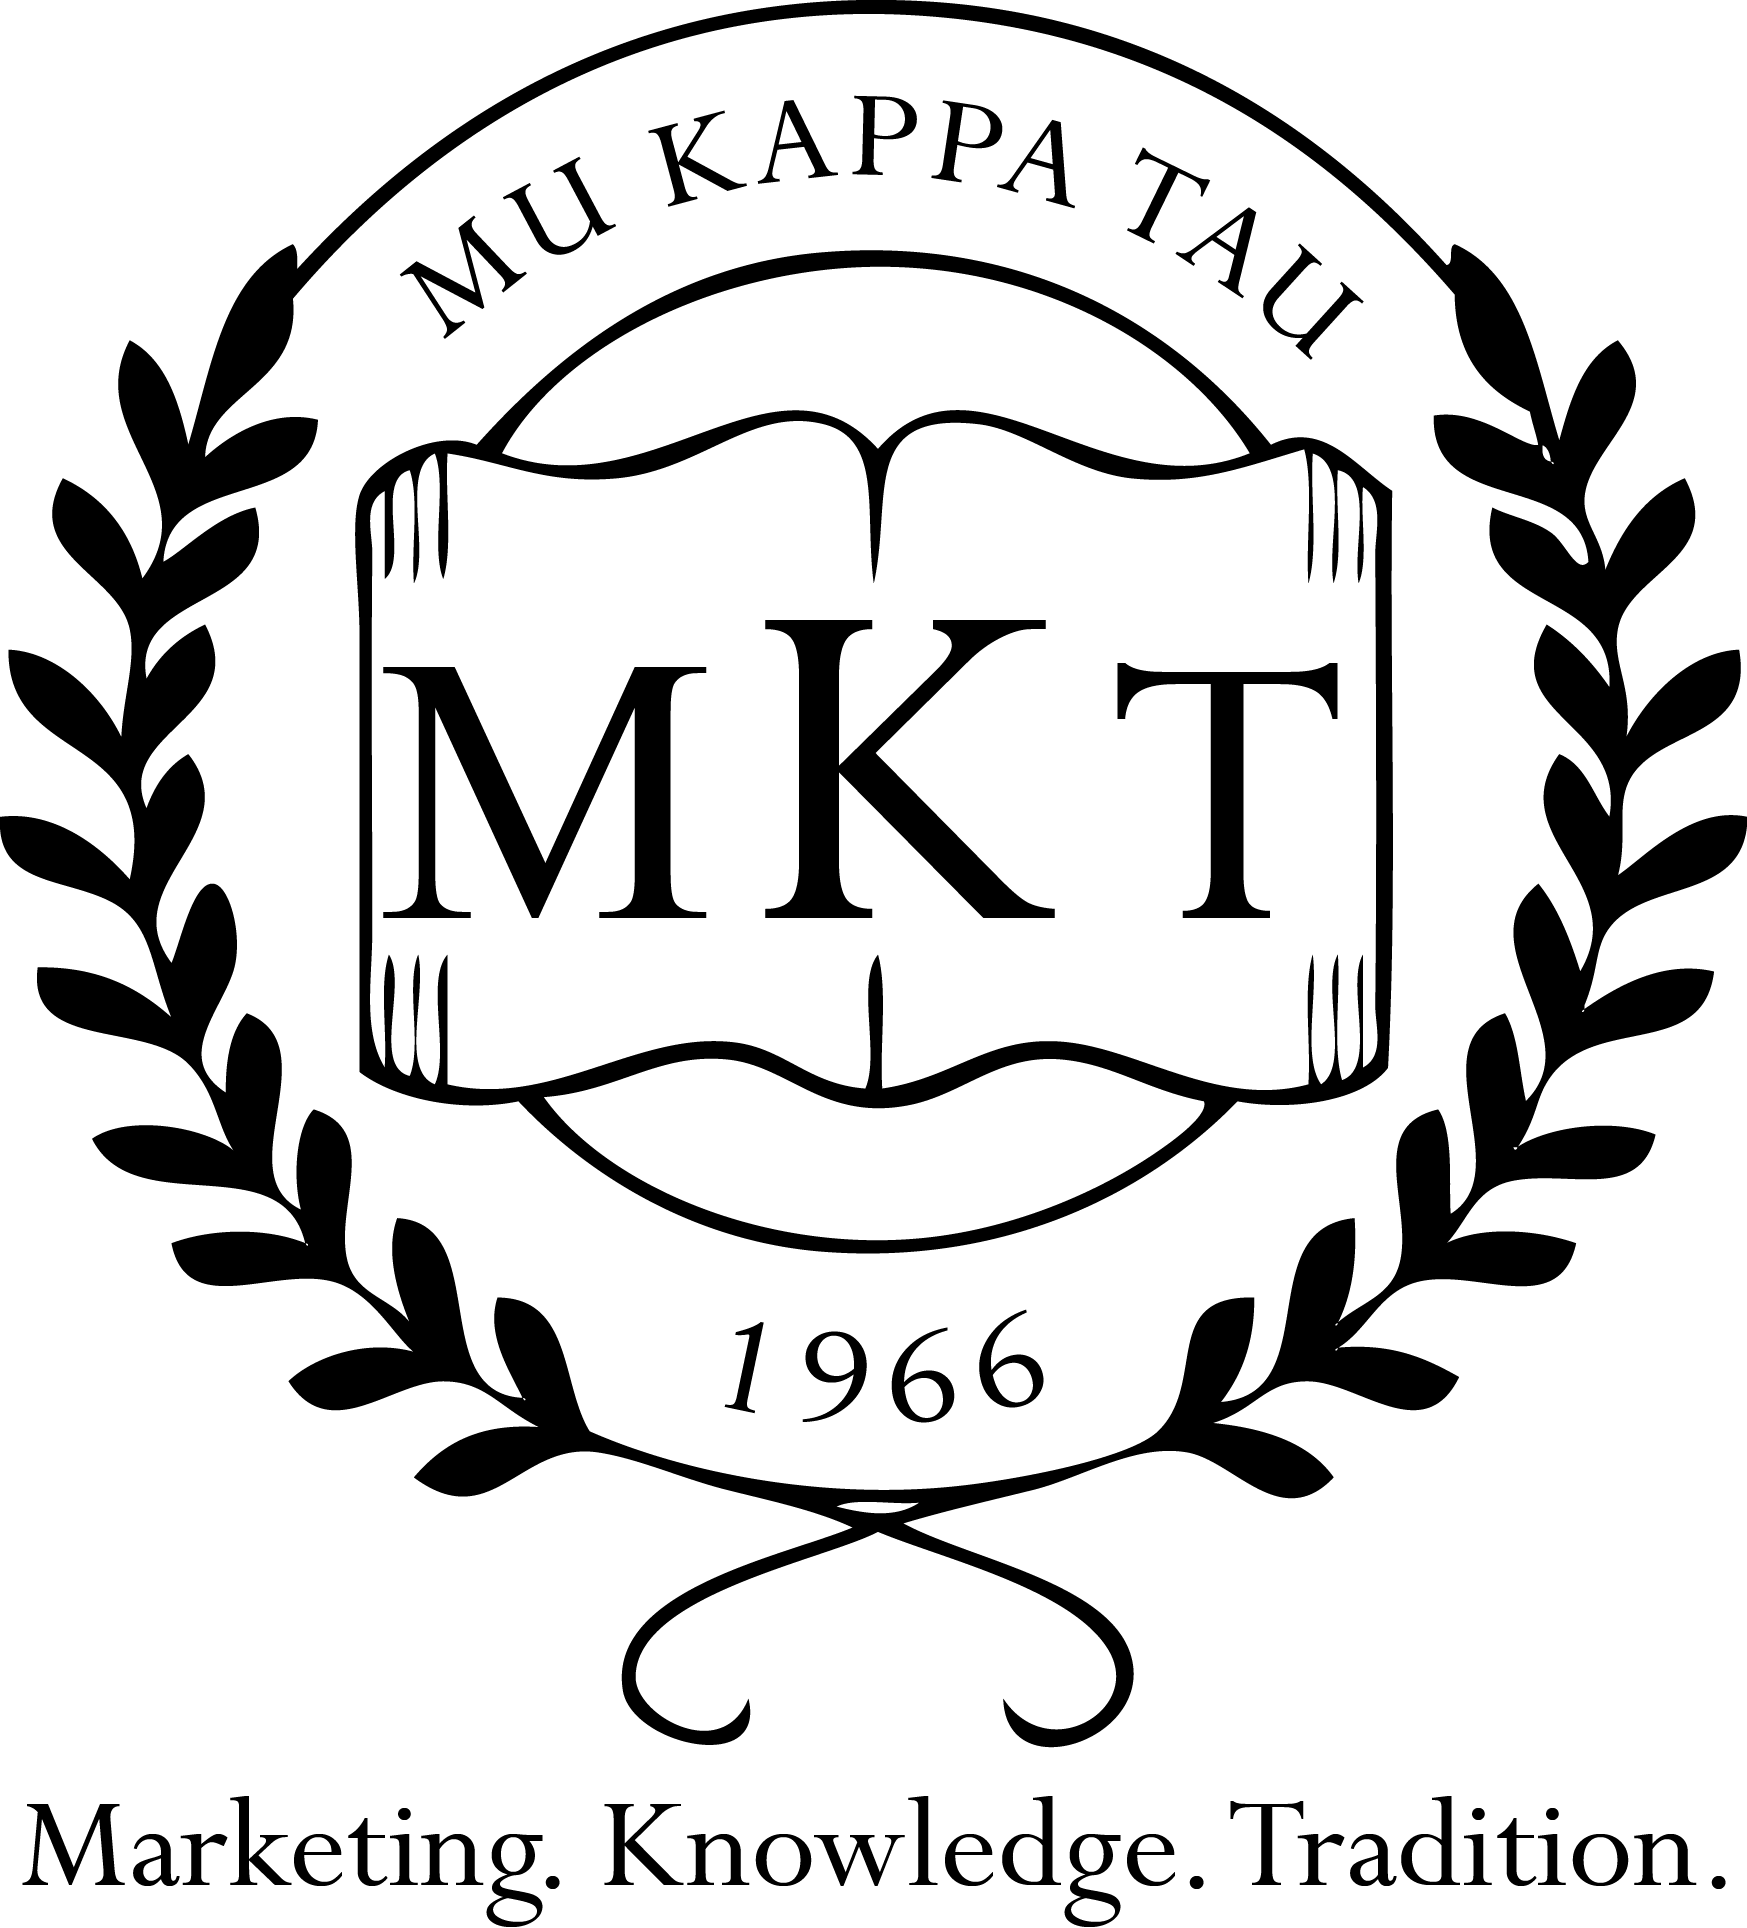 Mu Kappa Tau logo